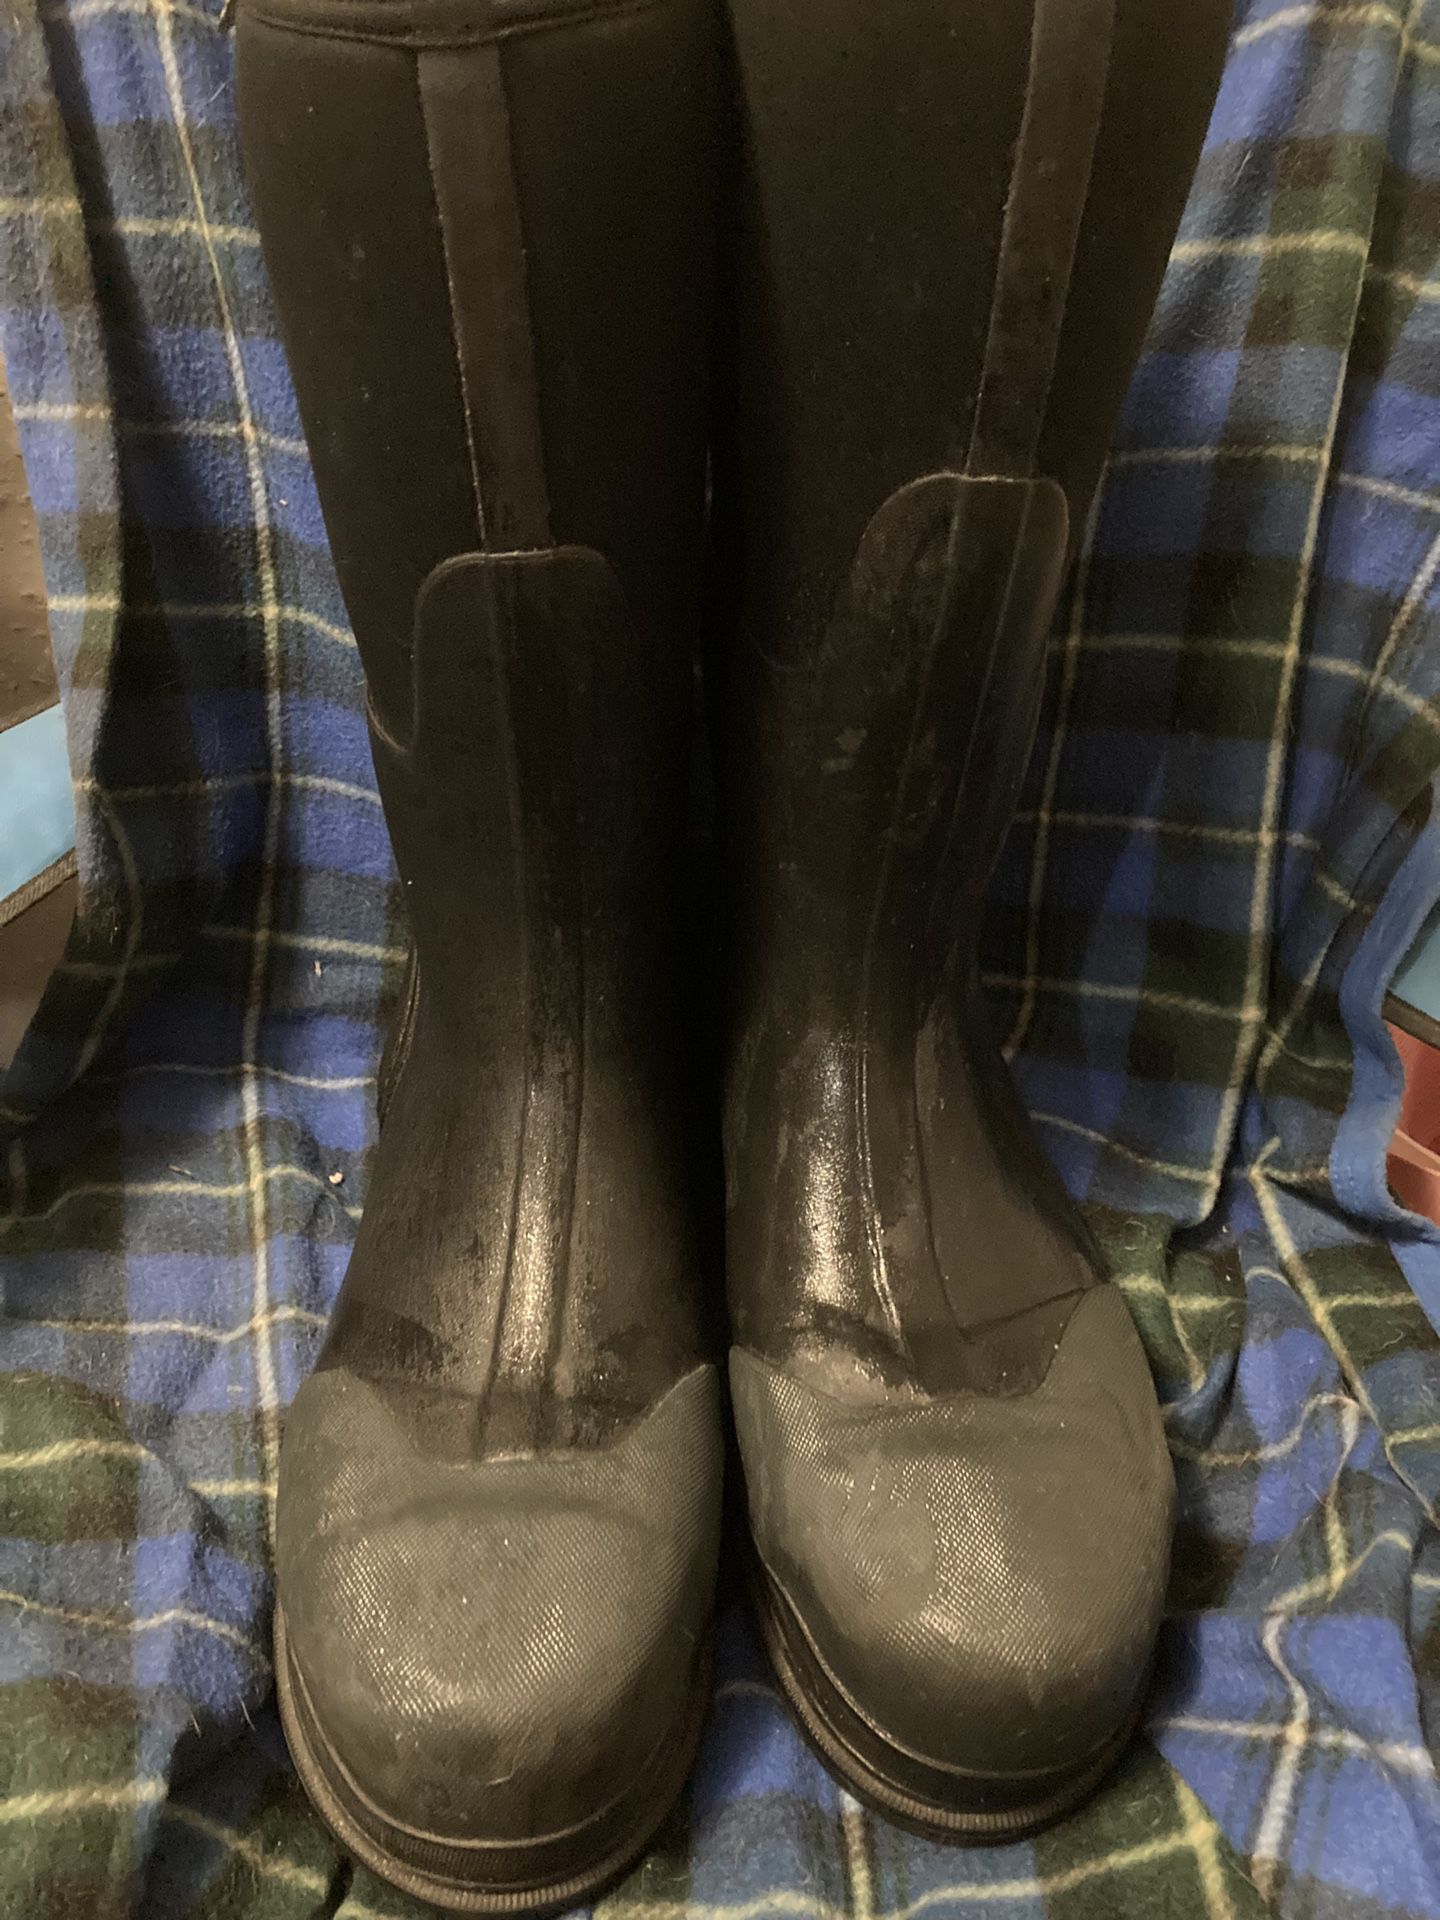 BARELY USED:  Bogs Men's Forge Steel Toe Waterproof Rubber Work Rain Boots